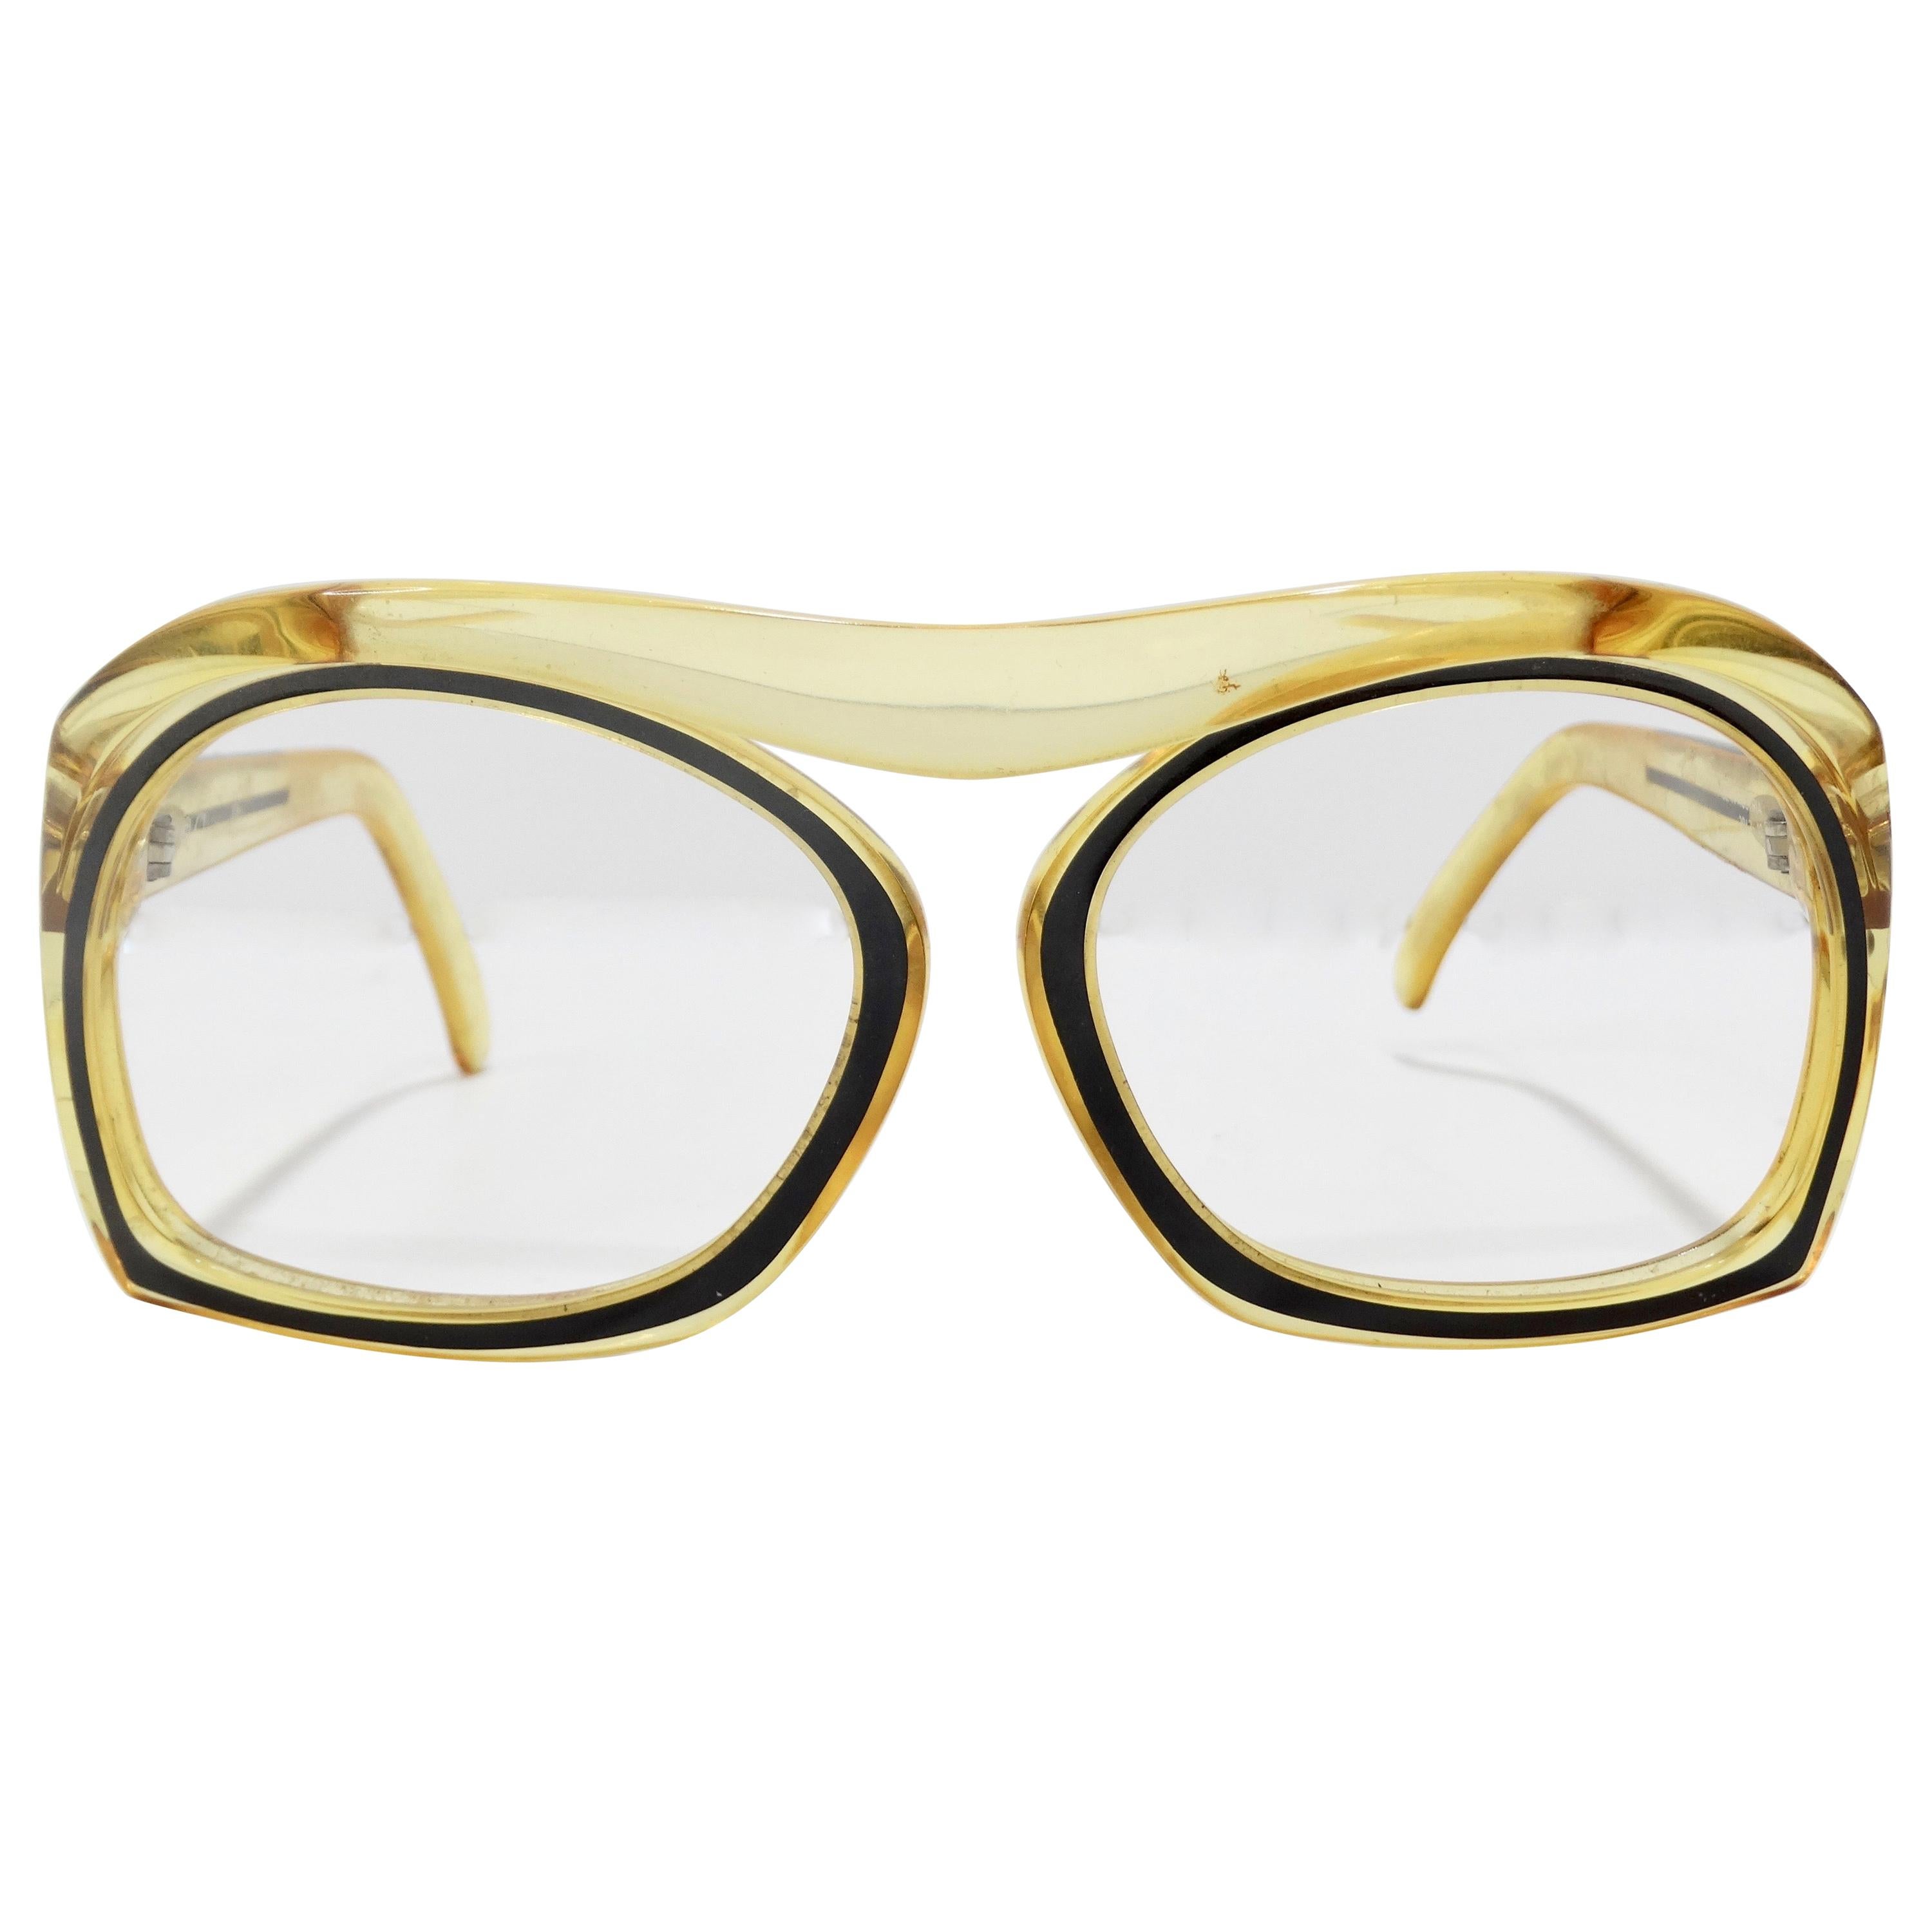 Christian Dior 1970s Oversized Glasses